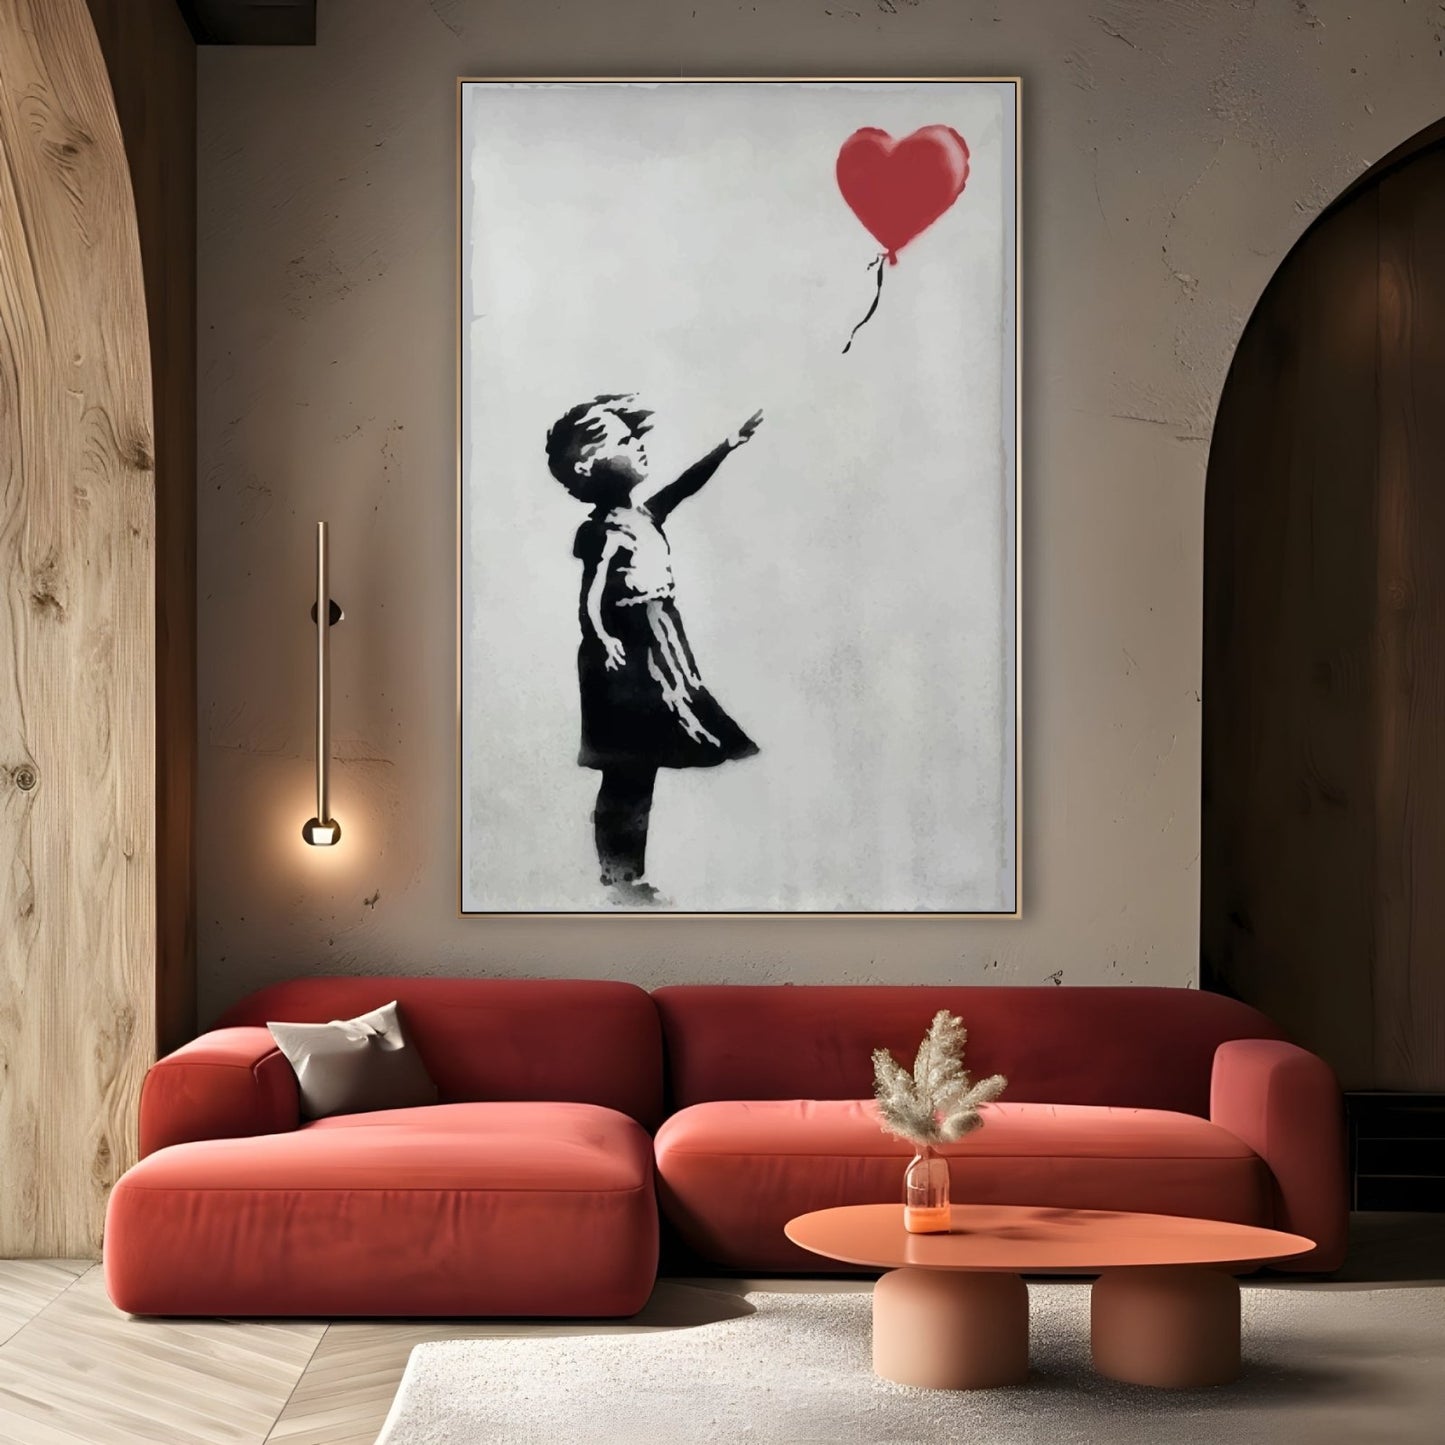 Balloon Girl, Banksy